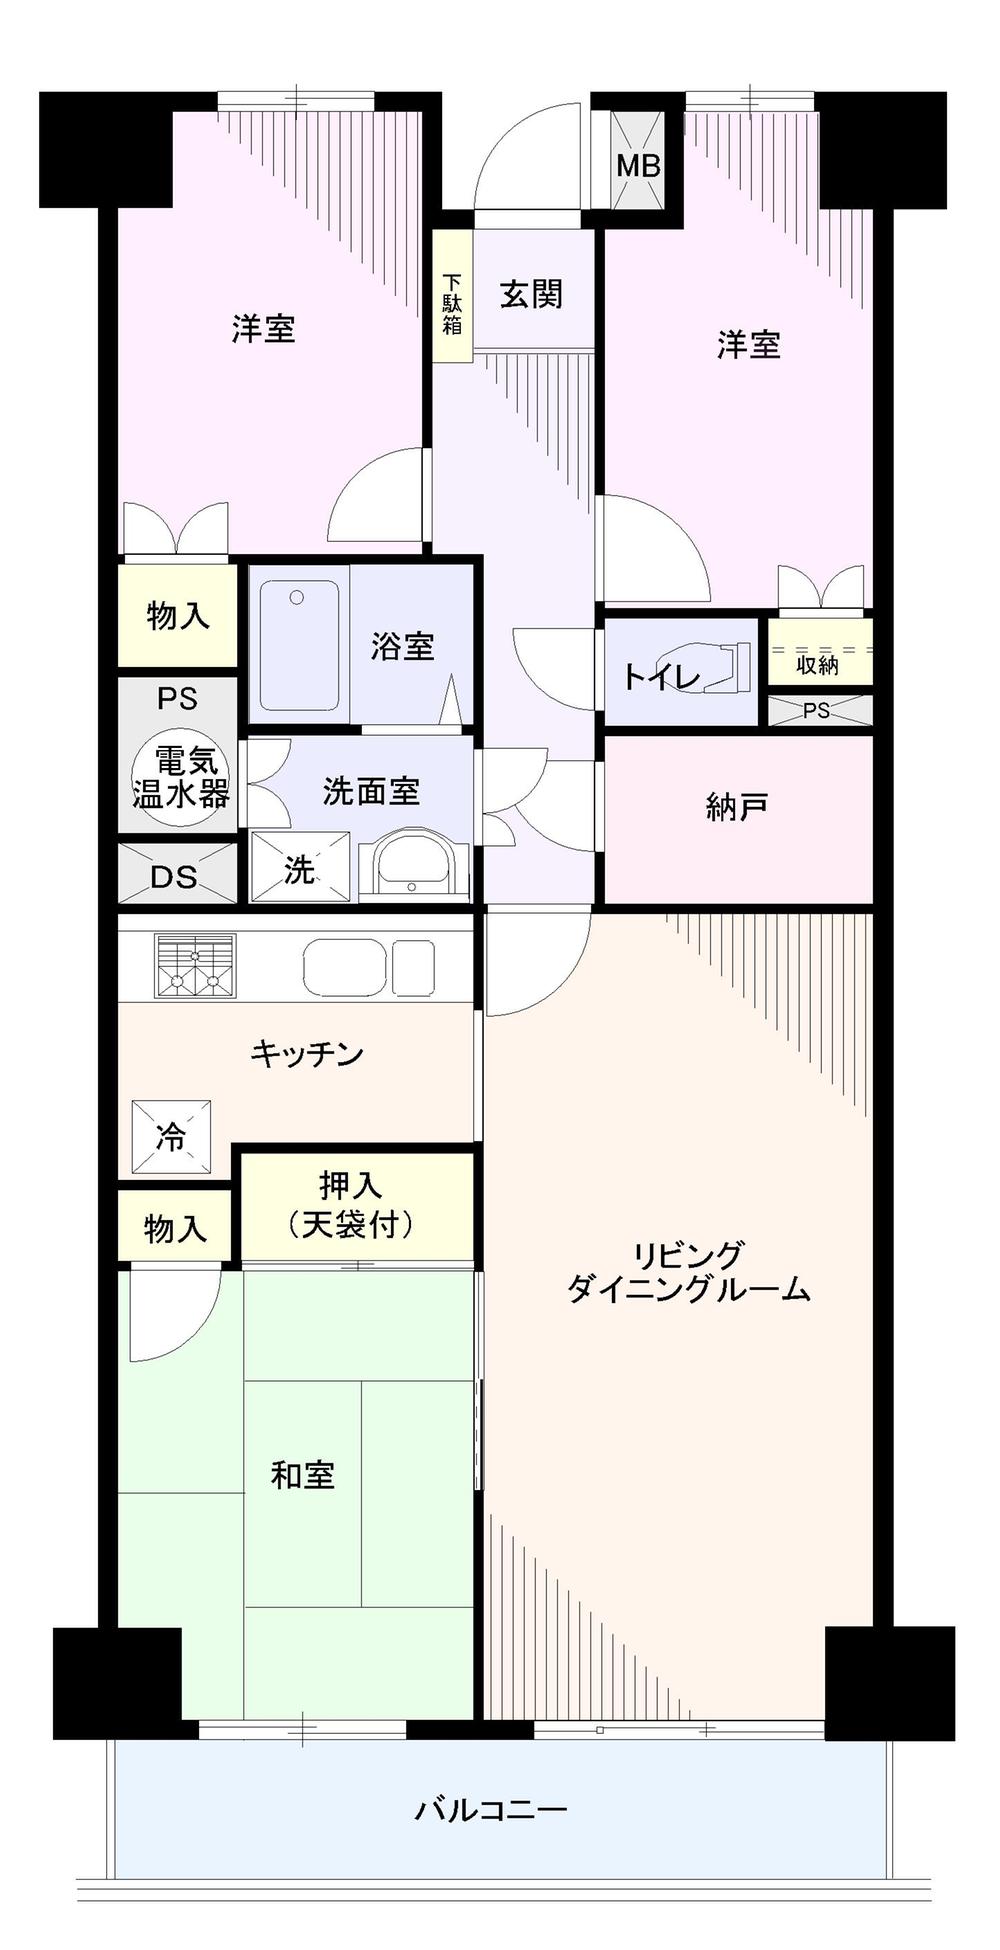 Floor plan. 3LDK + S (storeroom), Price 29,800,000 yen, Occupied area 73.38 sq m , Balcony area 7.2 sq m